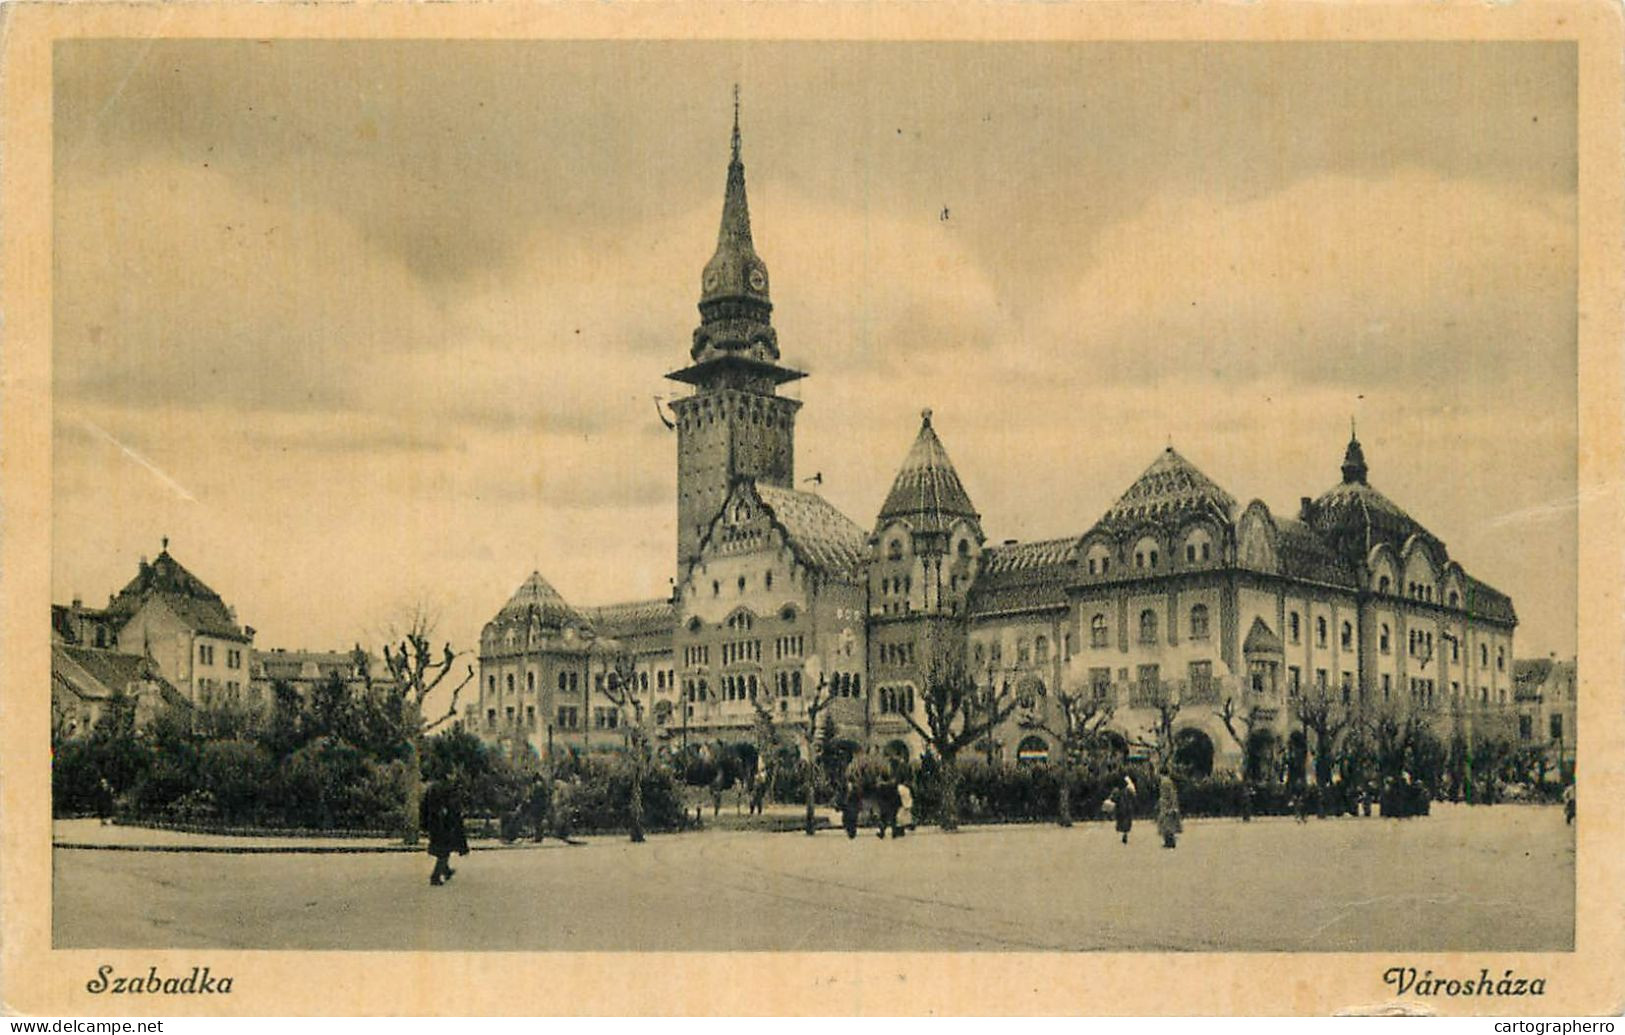 Serbia Subotica Town Hall - Serbia